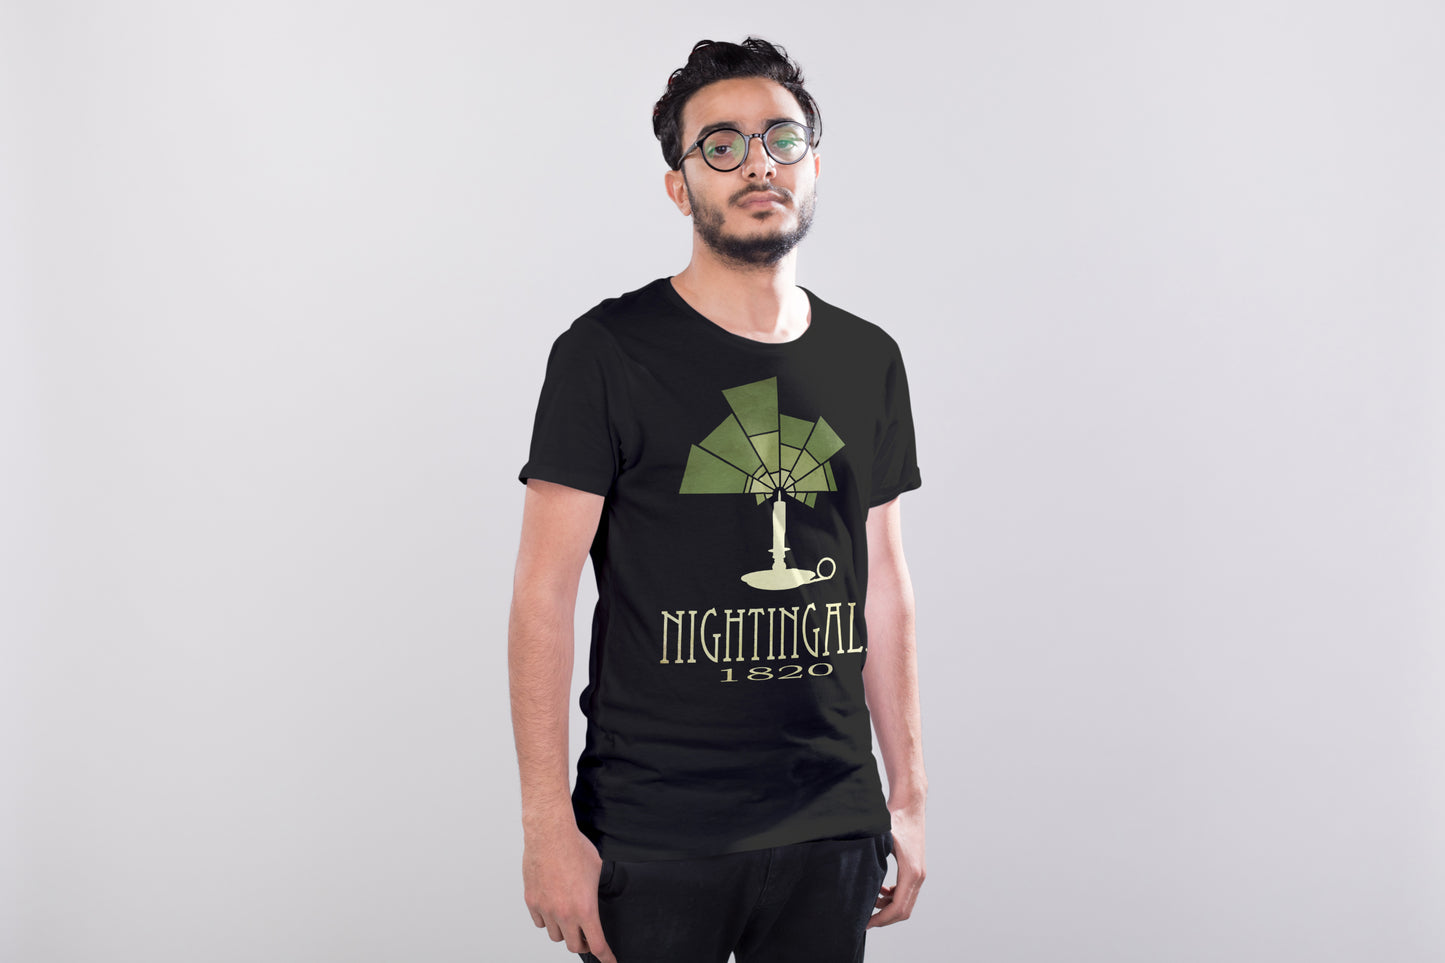 Nightingale Nursing T-shirt, Medical Woman in STEM Graphic Tee